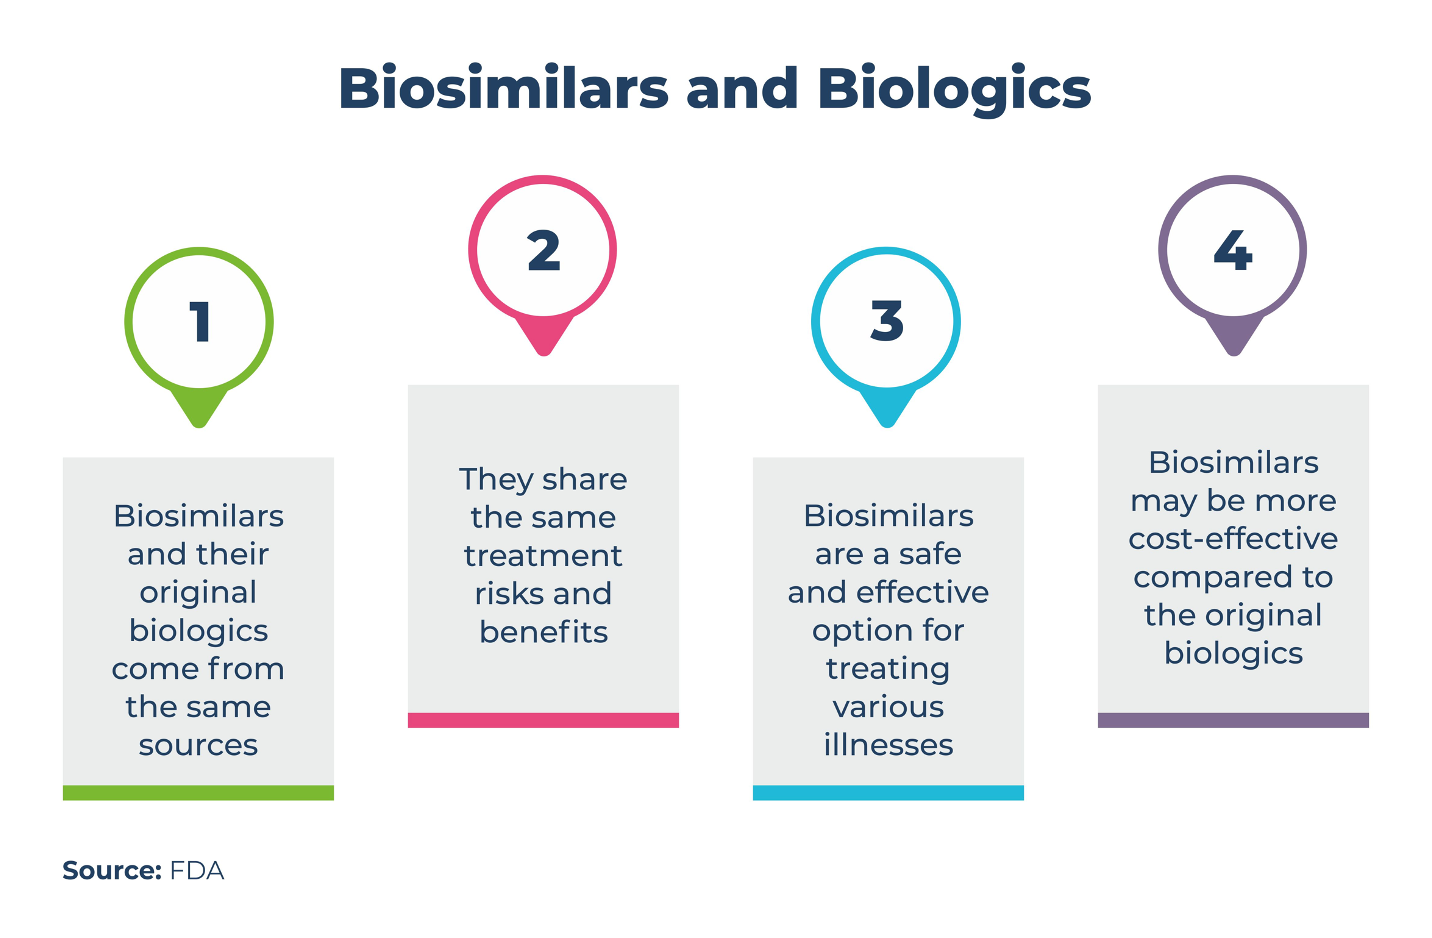 Table. Biosimilars and Biologics